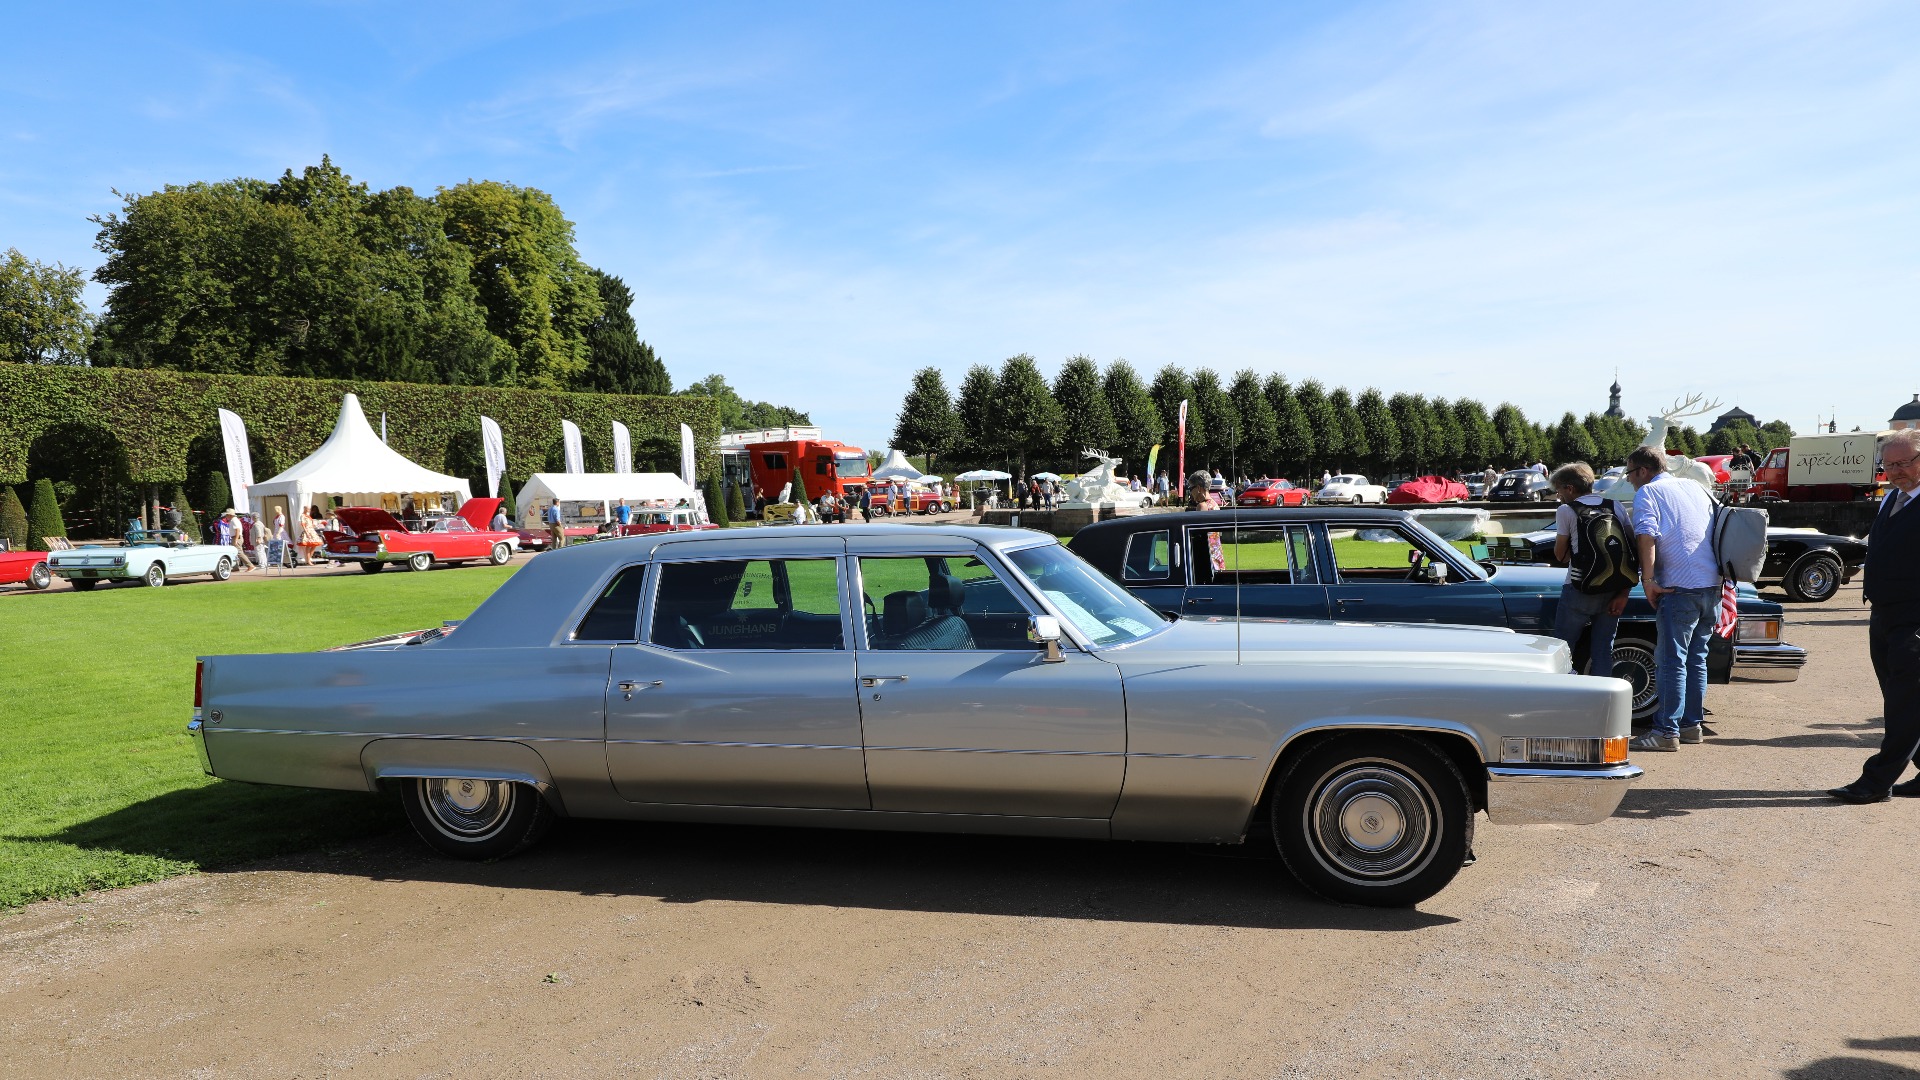 Voldsom 1969 Cadillac Fleetwood Limousine med 33.000 km på telleren. 